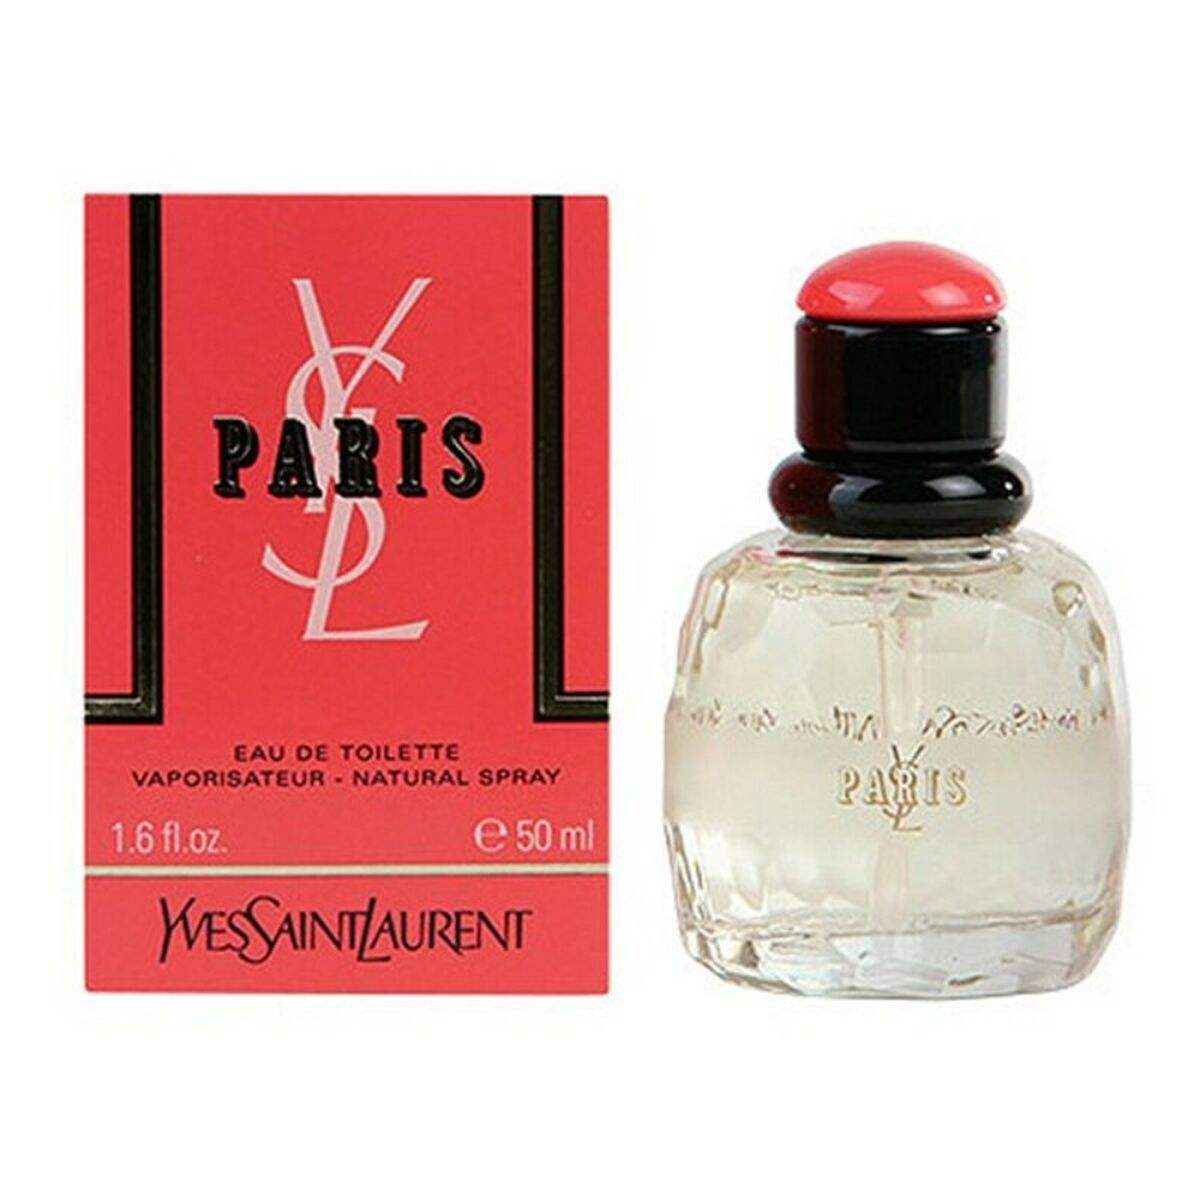 Perfume Mujer Paris Yves Saint Laurent YSL-002166 EDT 75 ml